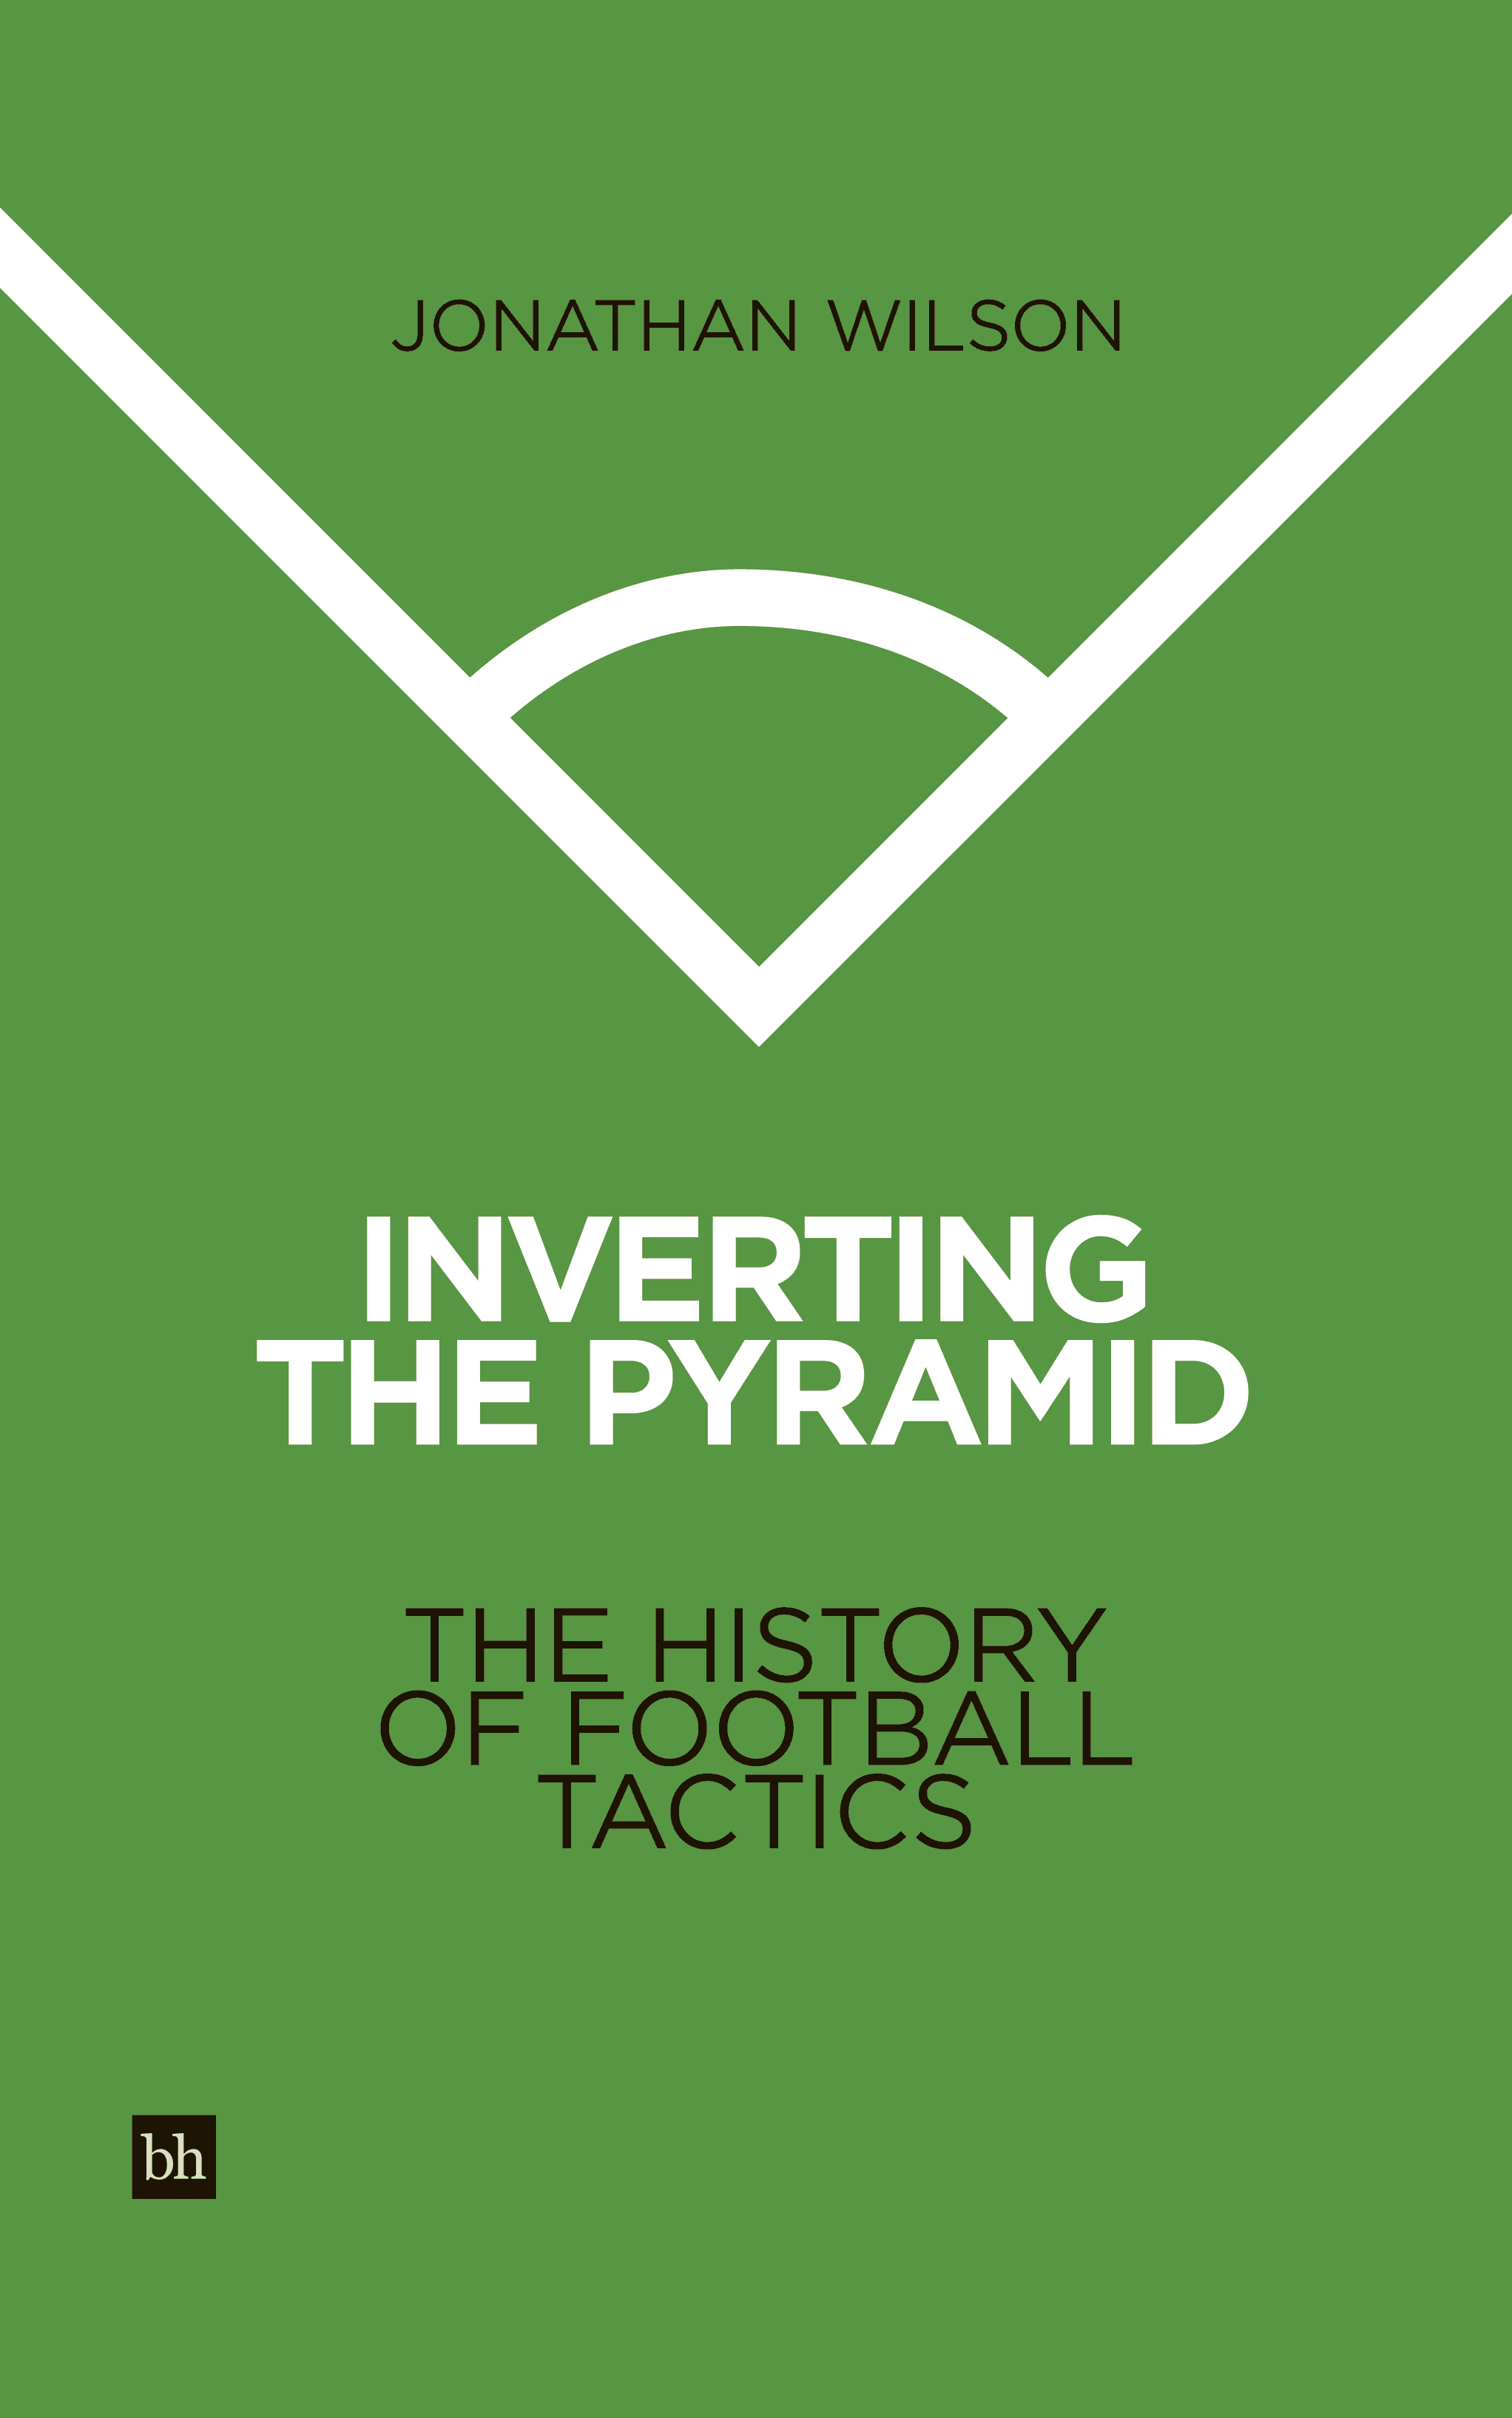 Inverting The Pyramid by Jonathan Wilson